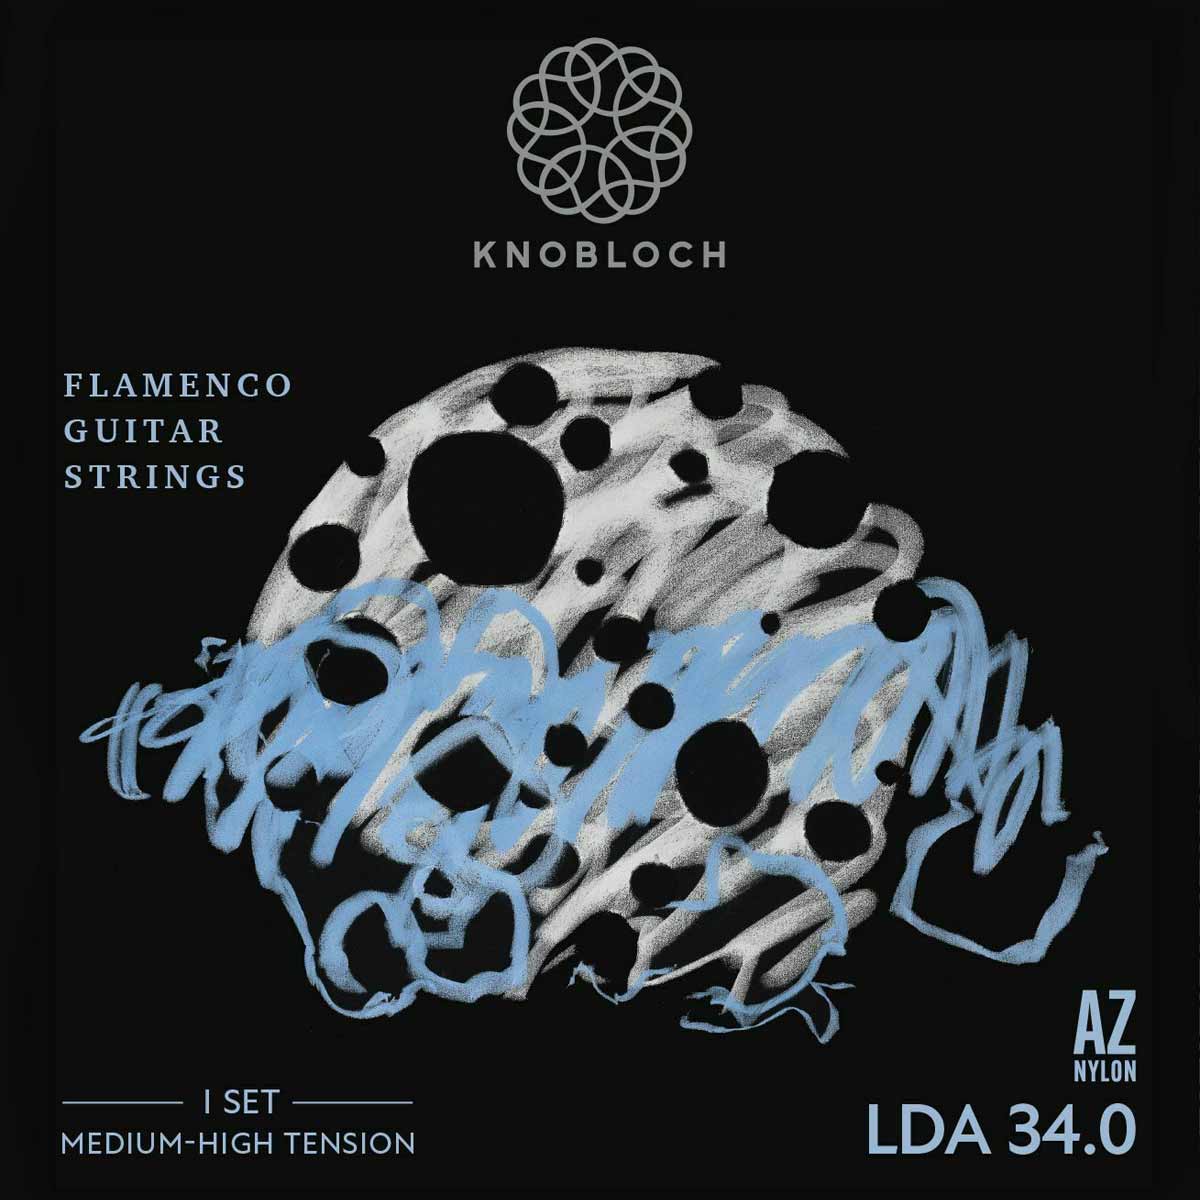 Knobloch Luna Flamenca AZ Nylon LDA 34.0 Medium High Tension